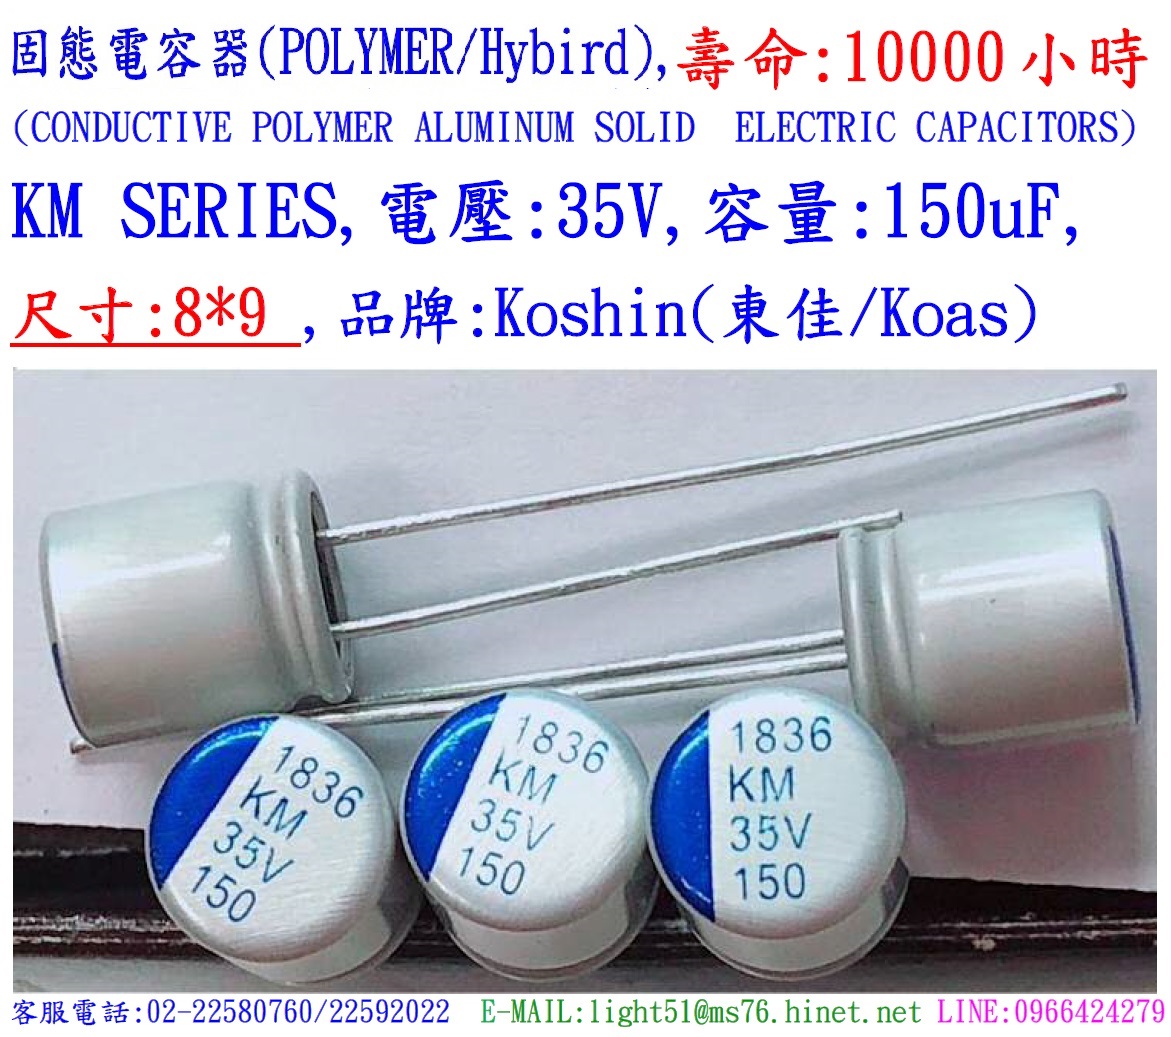 KM,35V,150uF,尺寸:8X9,固態電容器(POLYMER/Hybird),壽命:10000小時,KOSHIN(東佳)